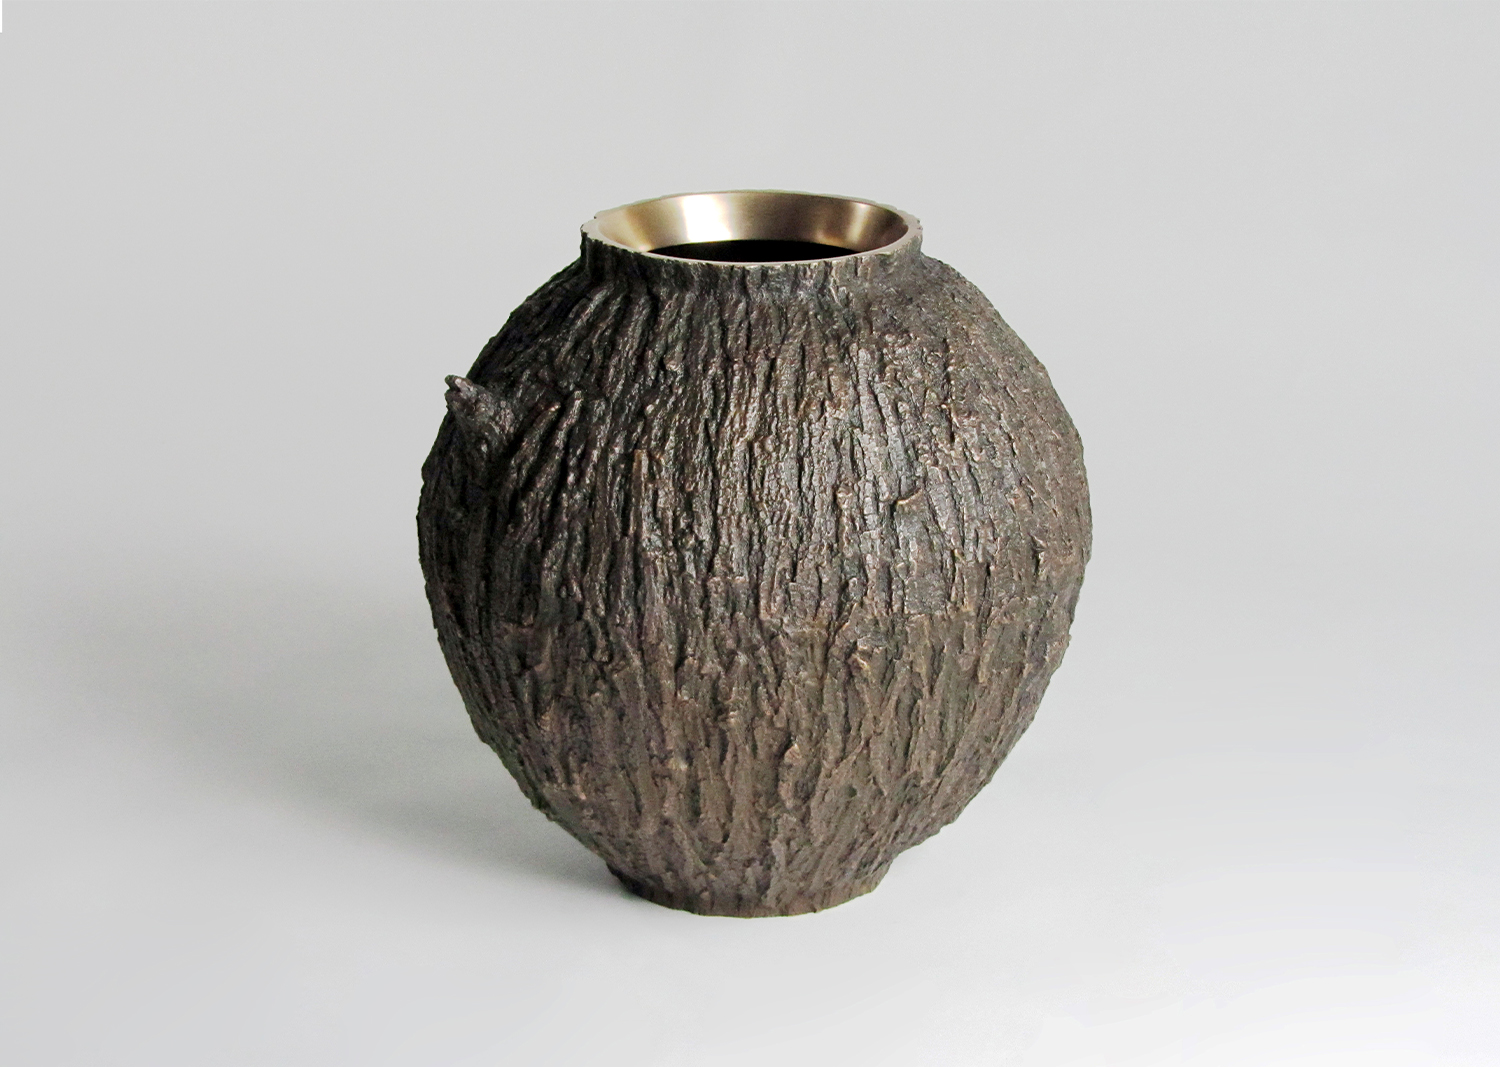 WOLFS + JUNG, Moon Tree, cast bronze (lost wax technique), 44Wx4Dx45Hcm, 2015@WOLFS + JUNG, Moon Tree, cast bronze (lost wax technique), 44Wx4Dx45Hcm, 2015